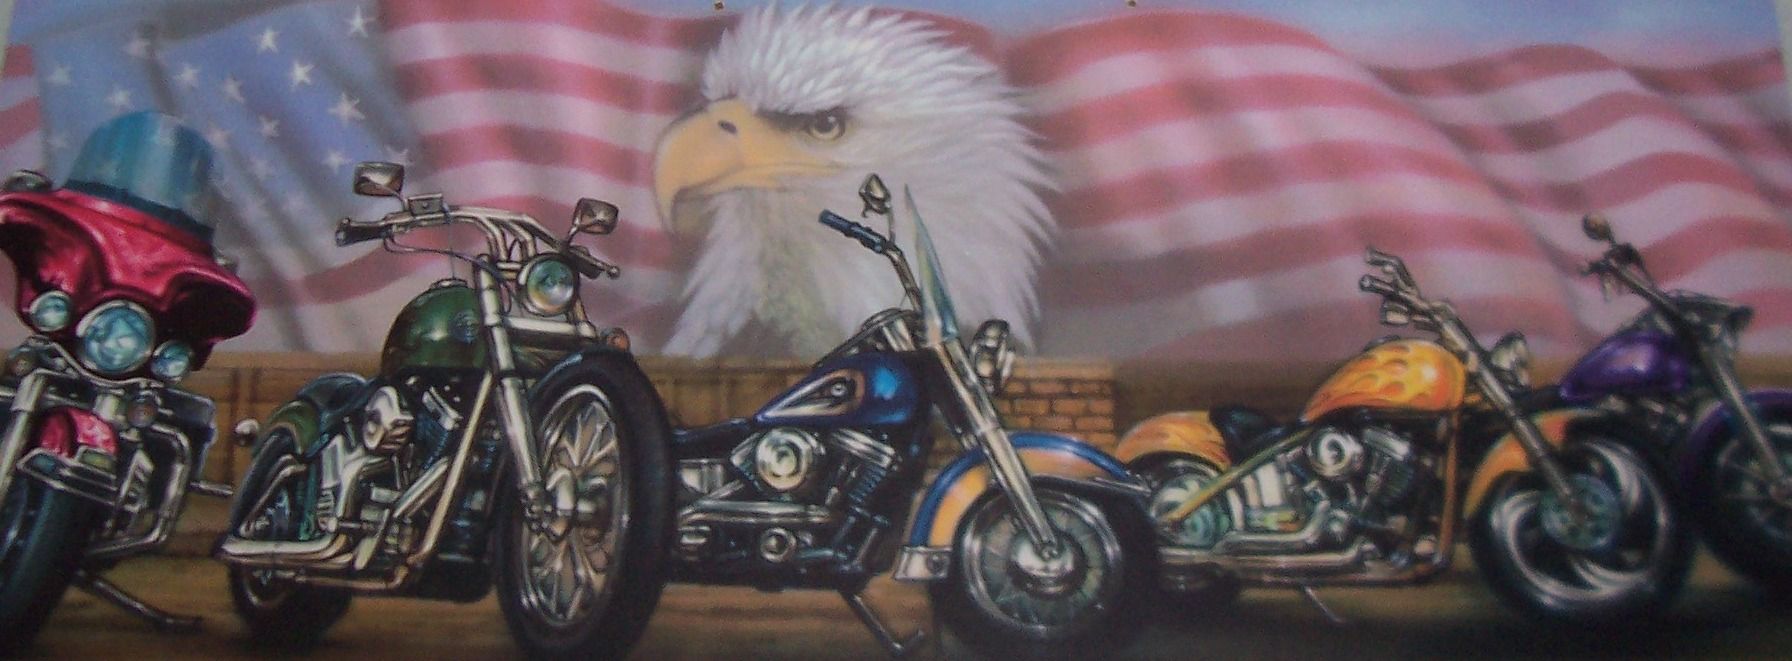 harley davidson wallpaper border,vehicle,motorcycle,bird,car,chopper